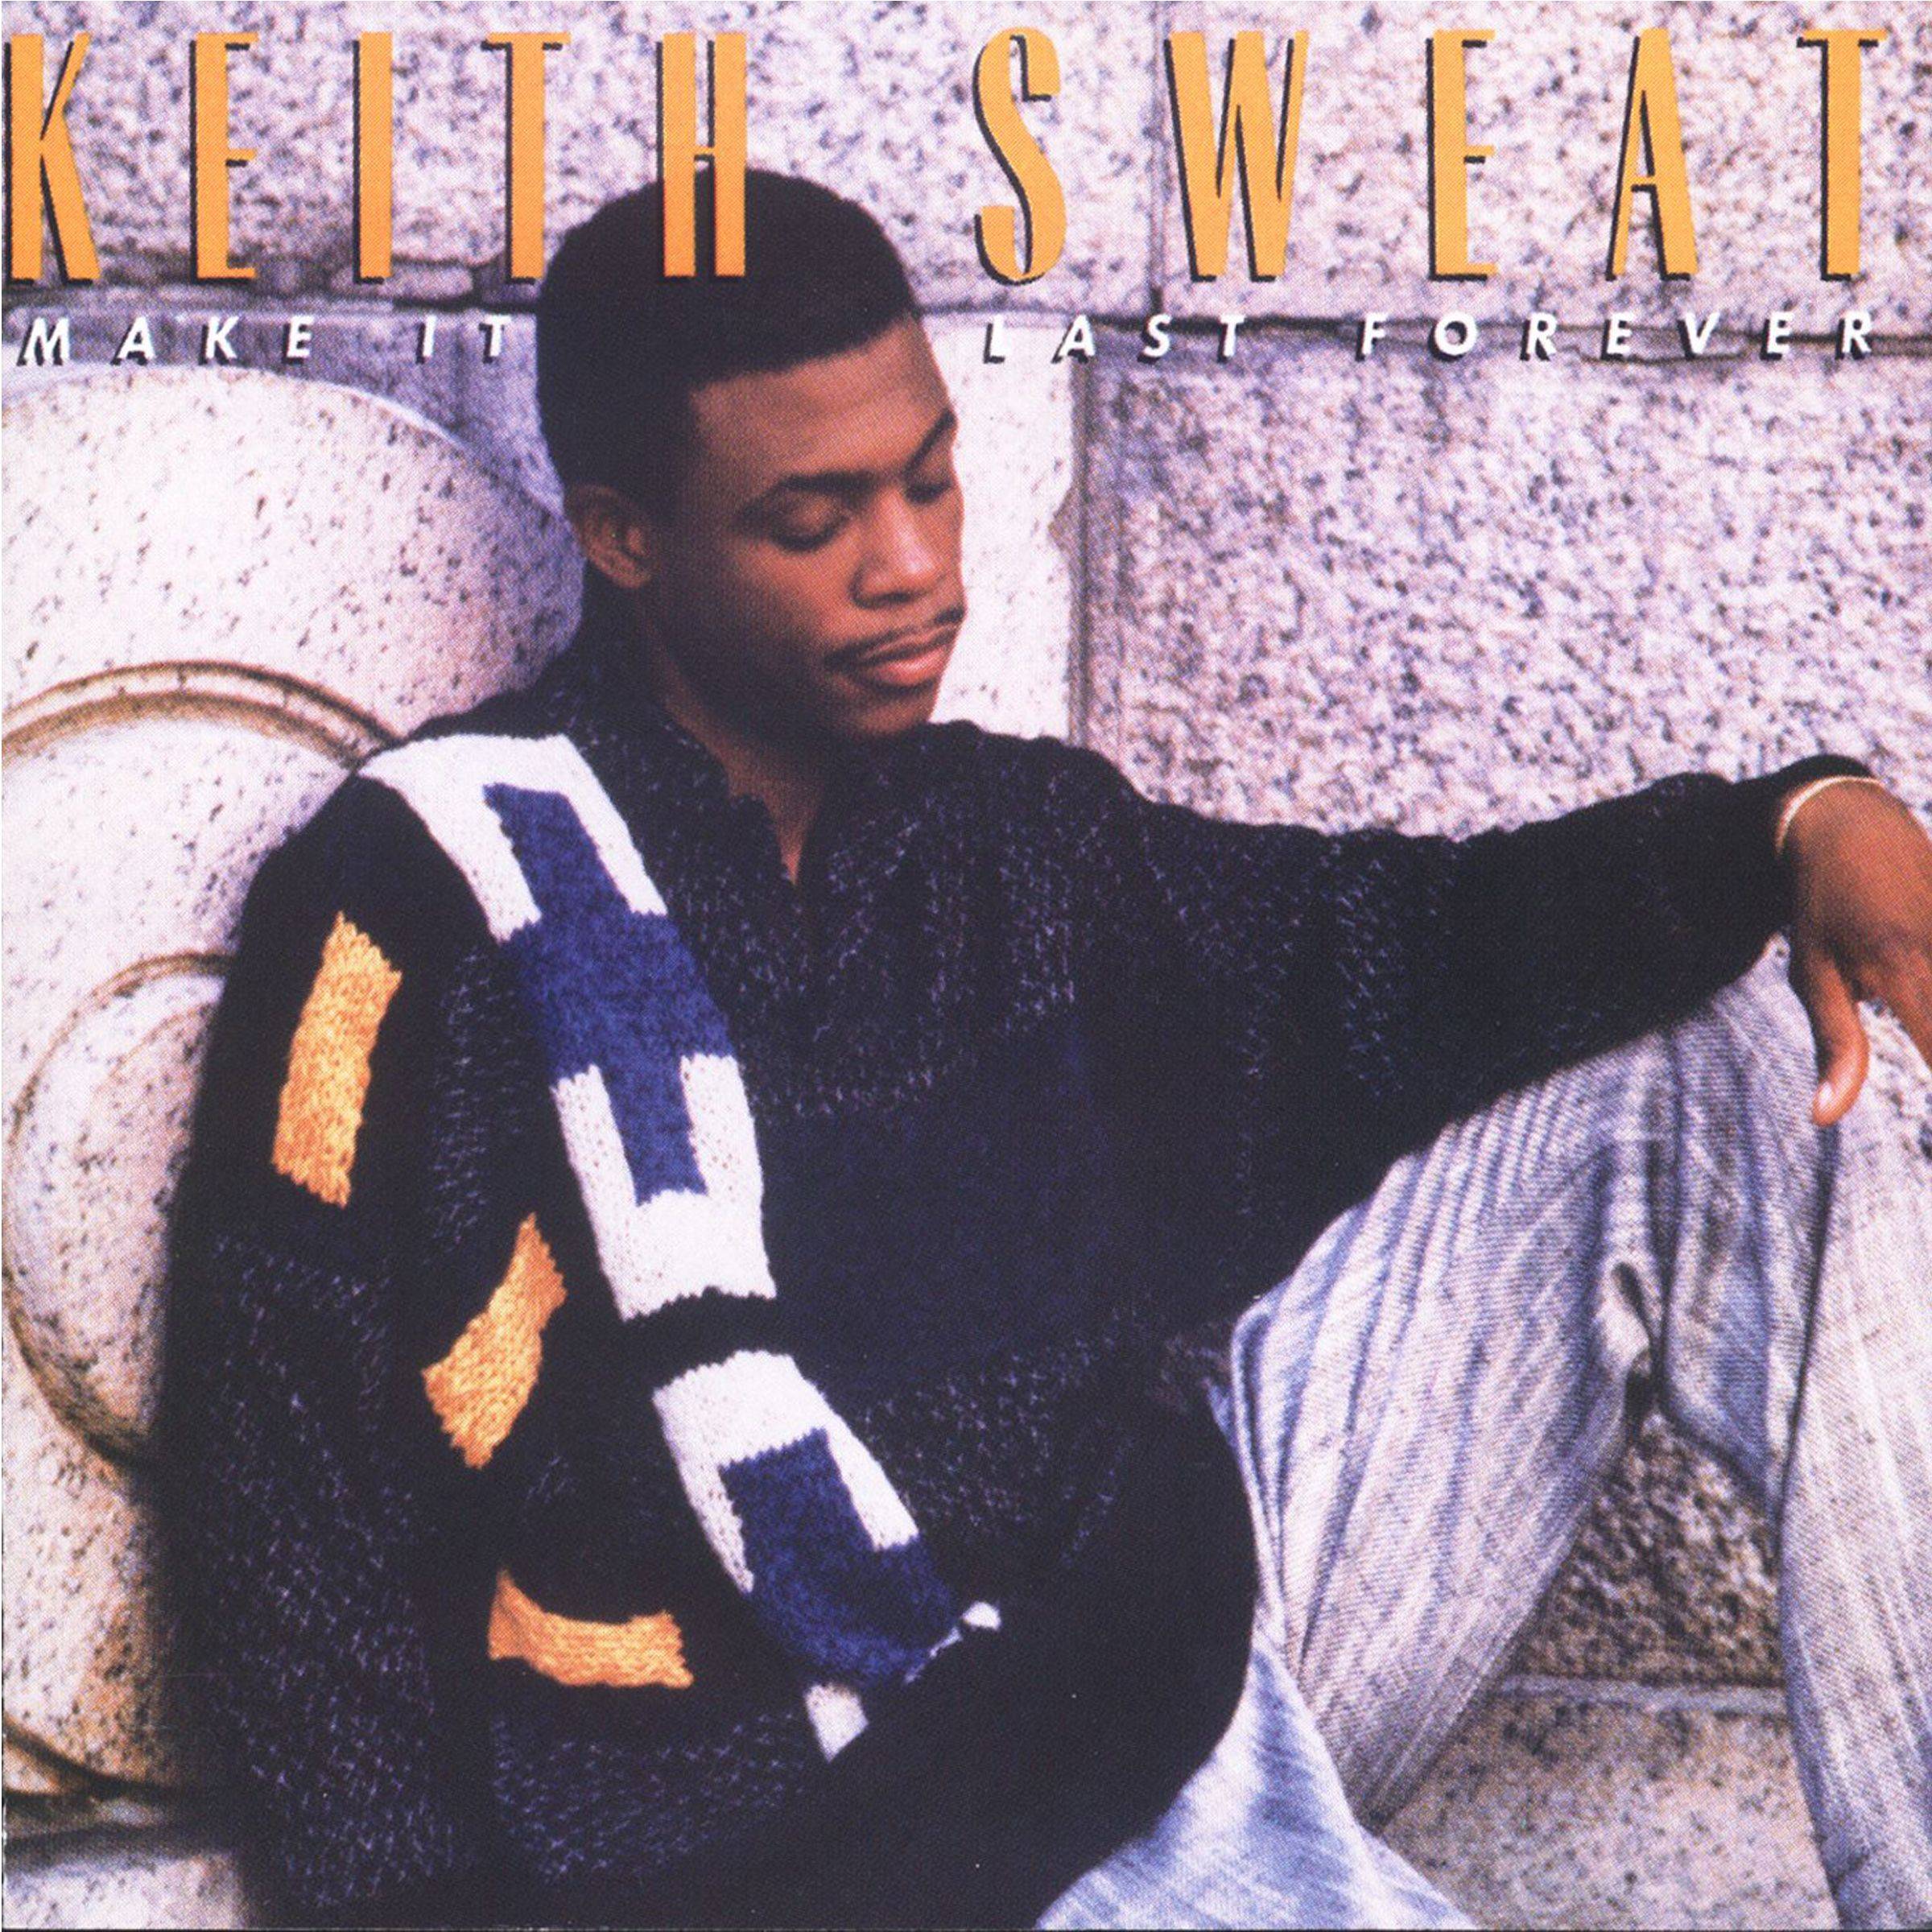 Keith Sweat - Make It Last Forever (1987/2016) [AcousticSounds FLAC 24bit/192kHz]